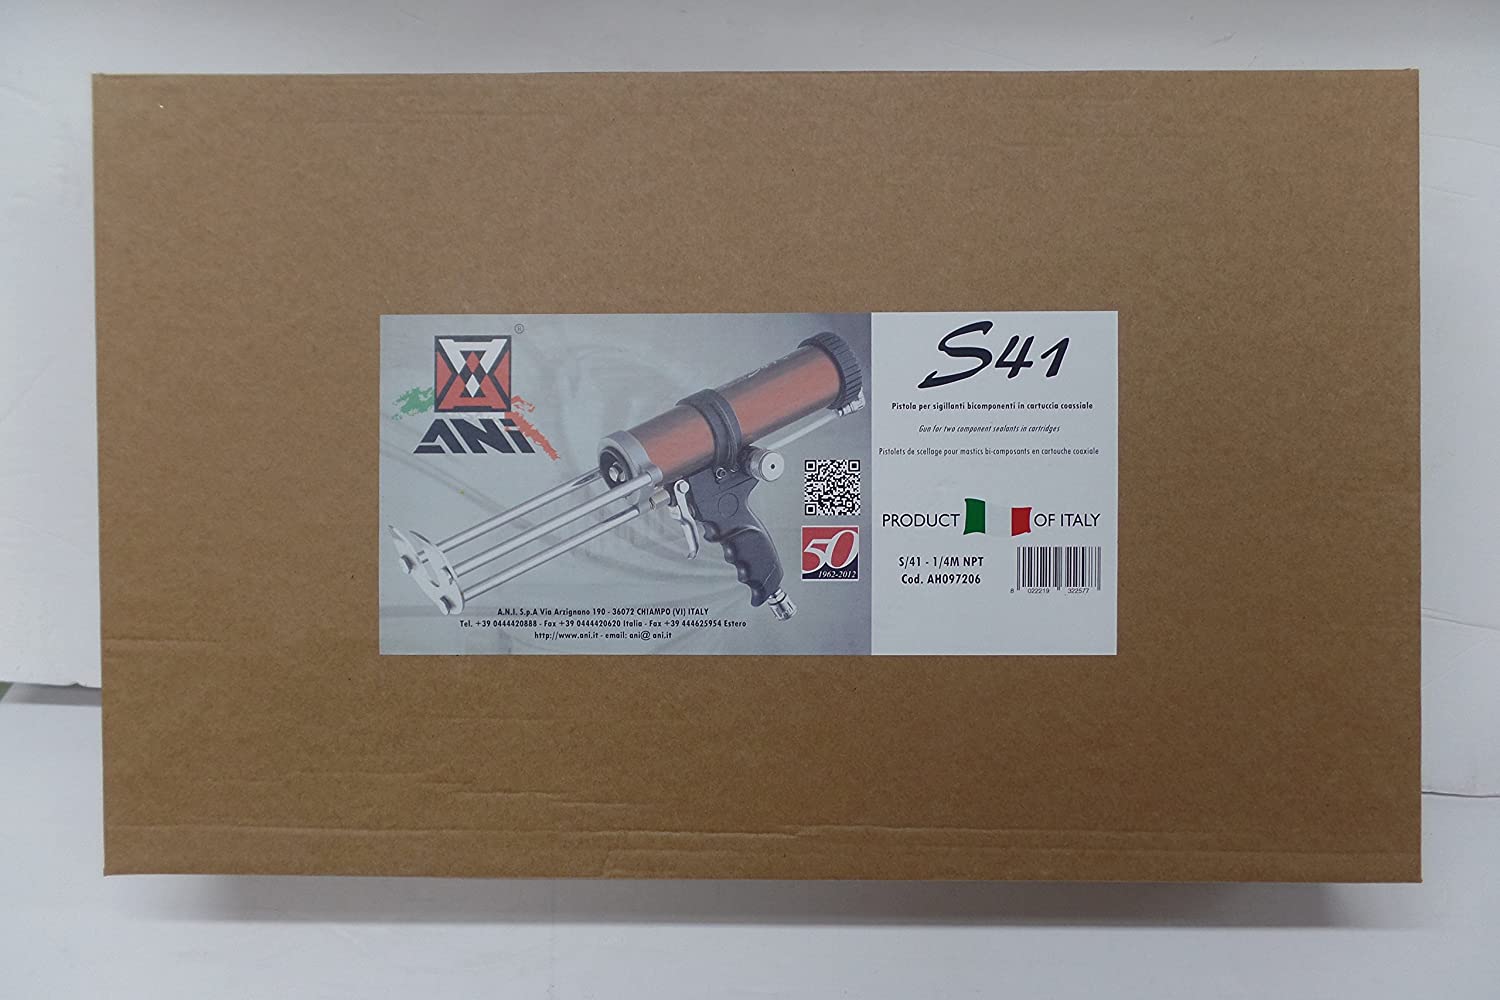 ANI S/41 Caulking Sprayable Seam Sealer Applicator Gun - Maazzo